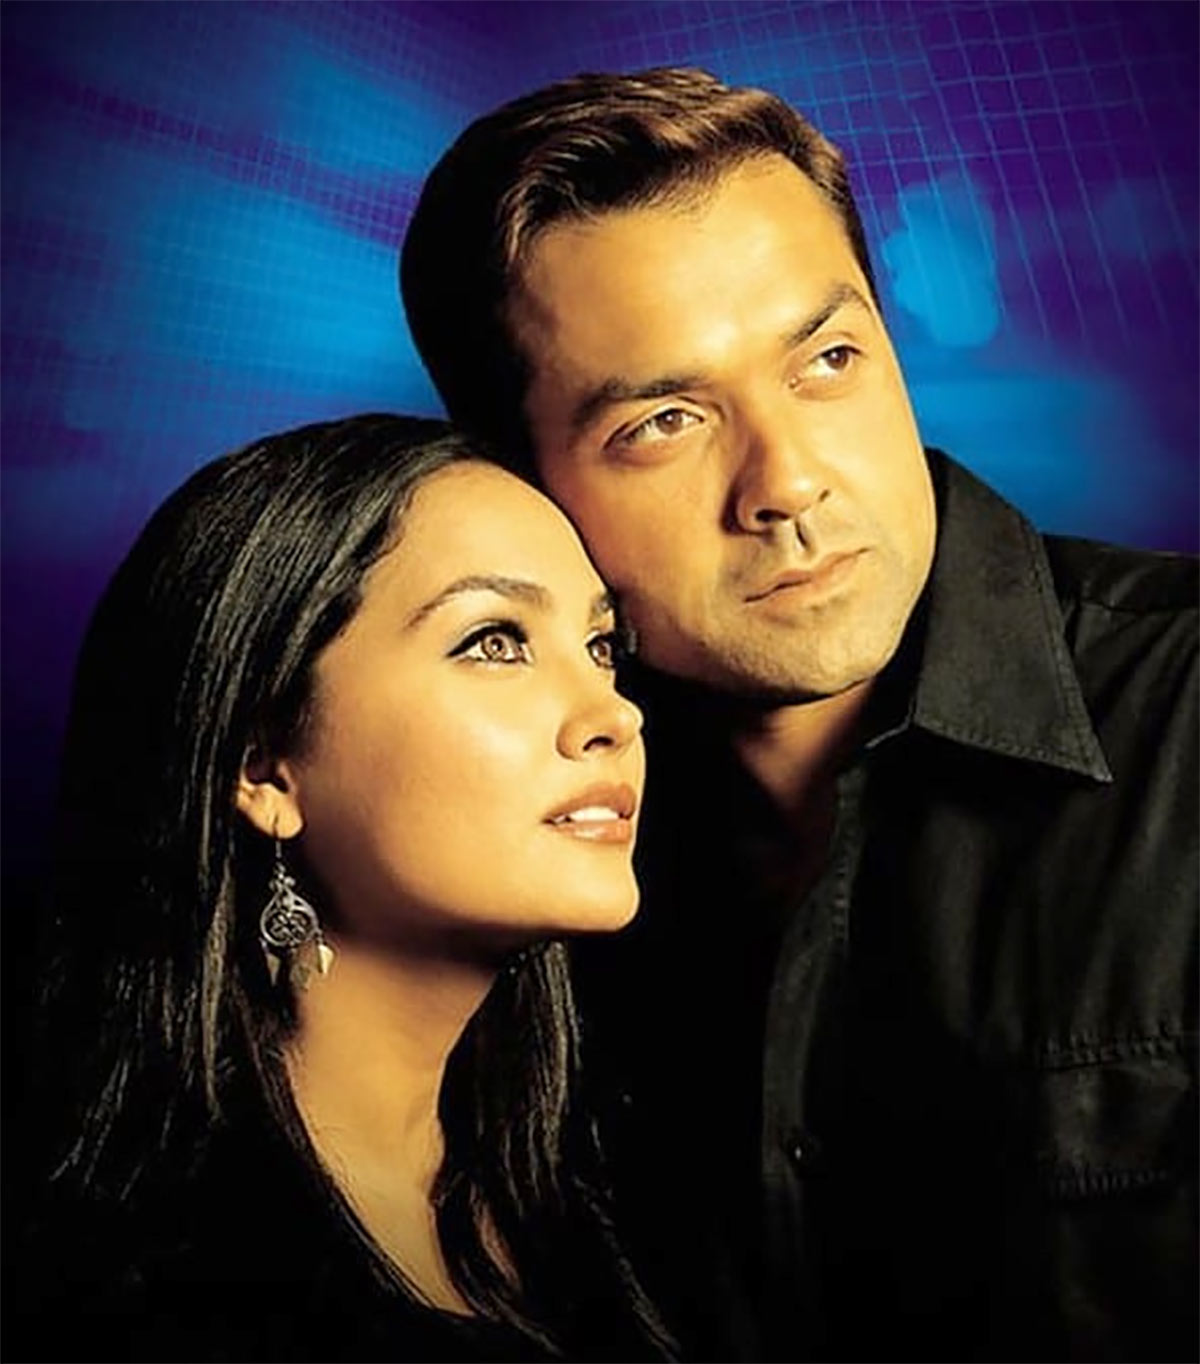 jurm full movie bobby deol 2005 hd hindi